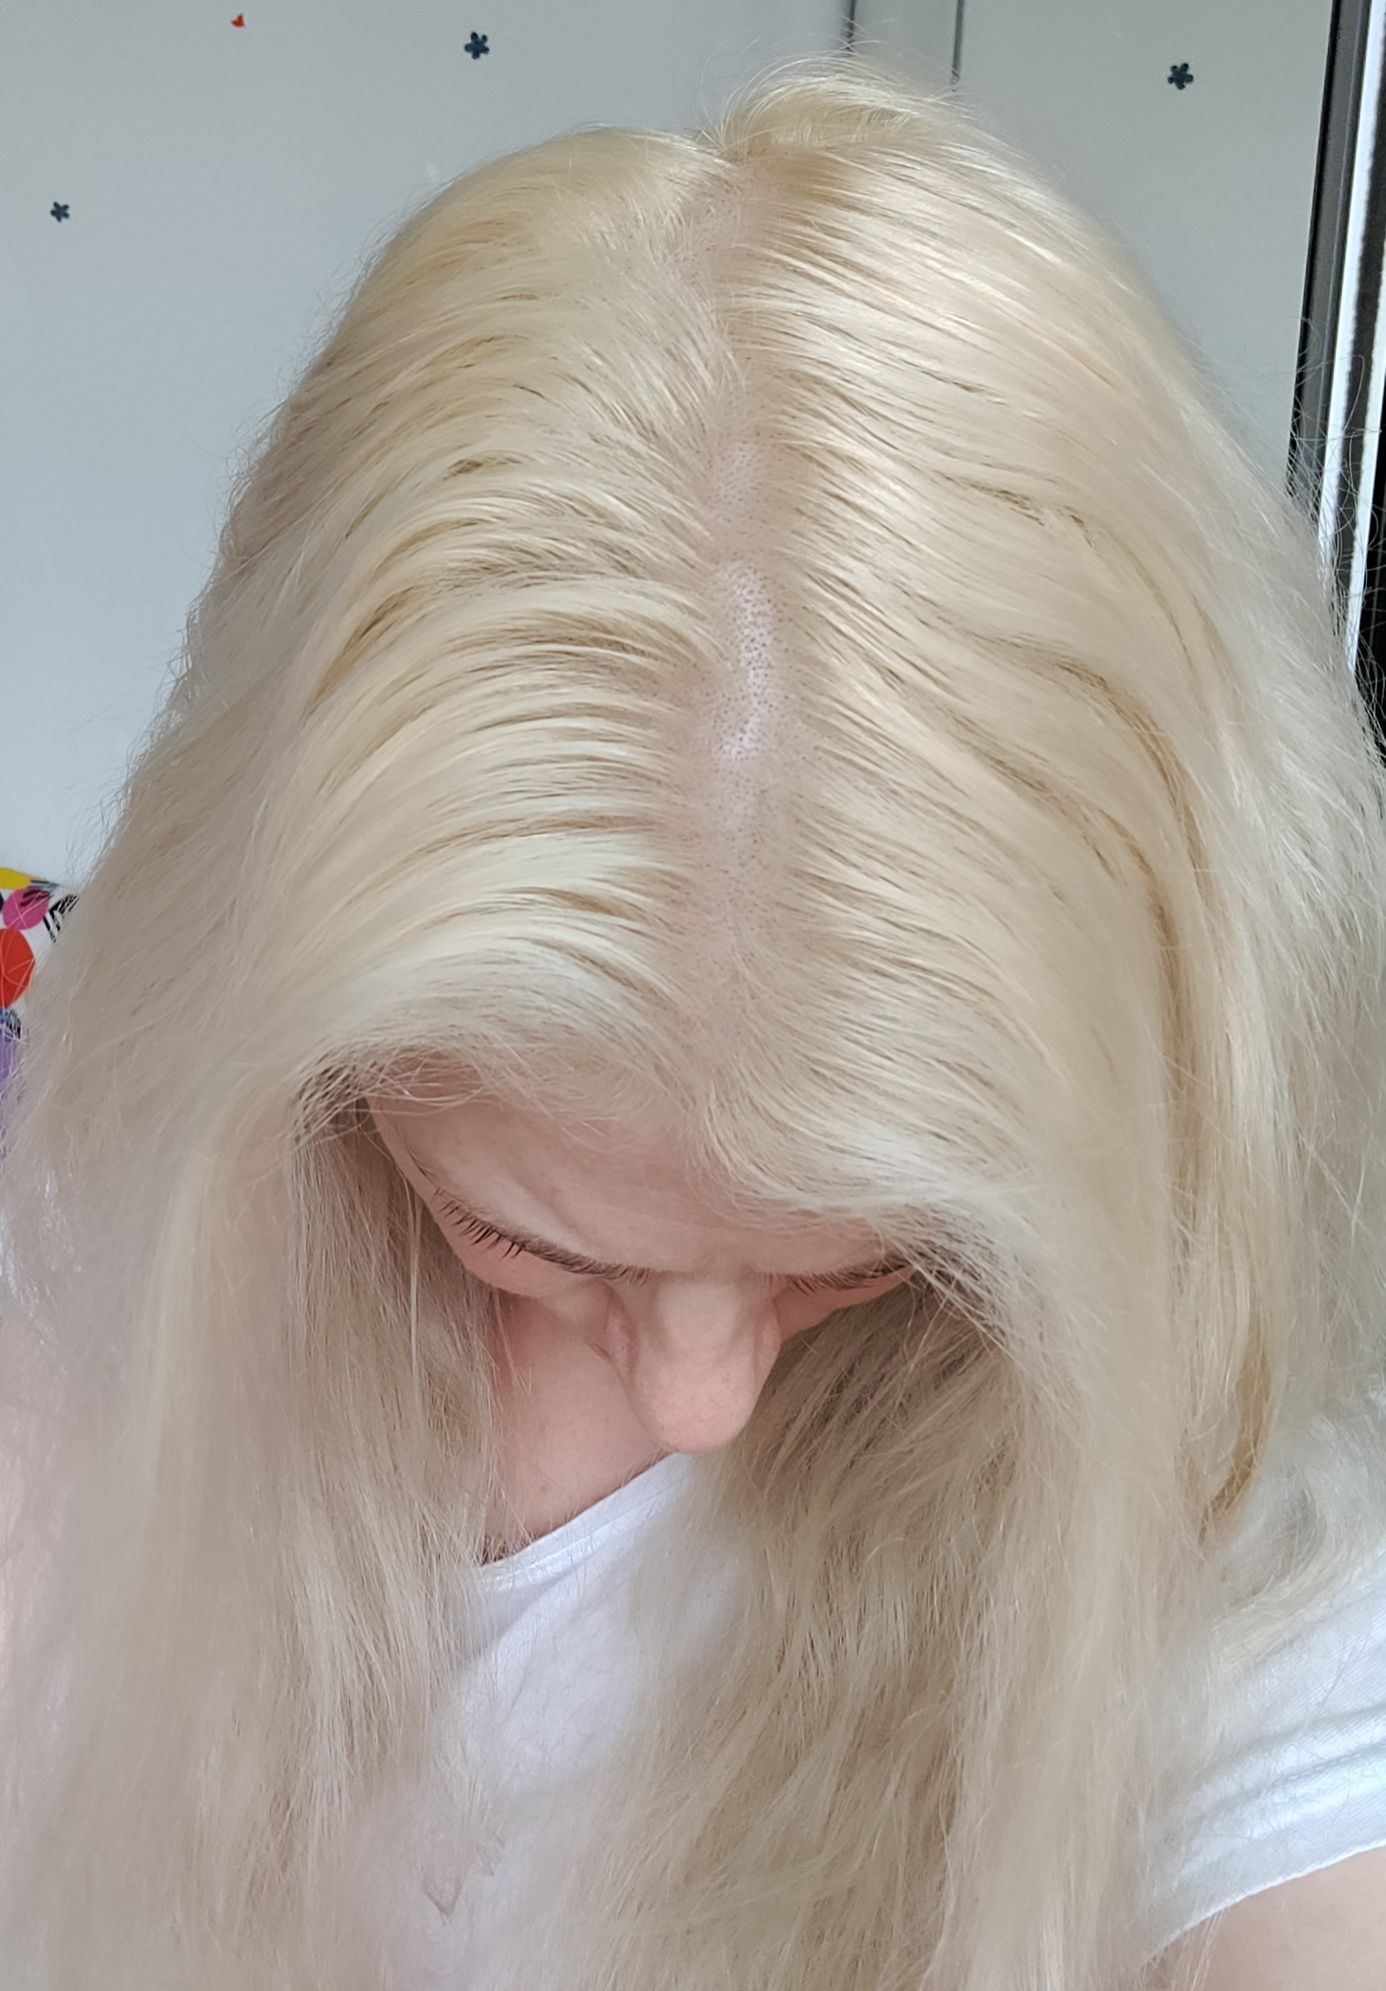 Hair stylist la domiciliu/vopsit, decolorat pentru par blond/gri